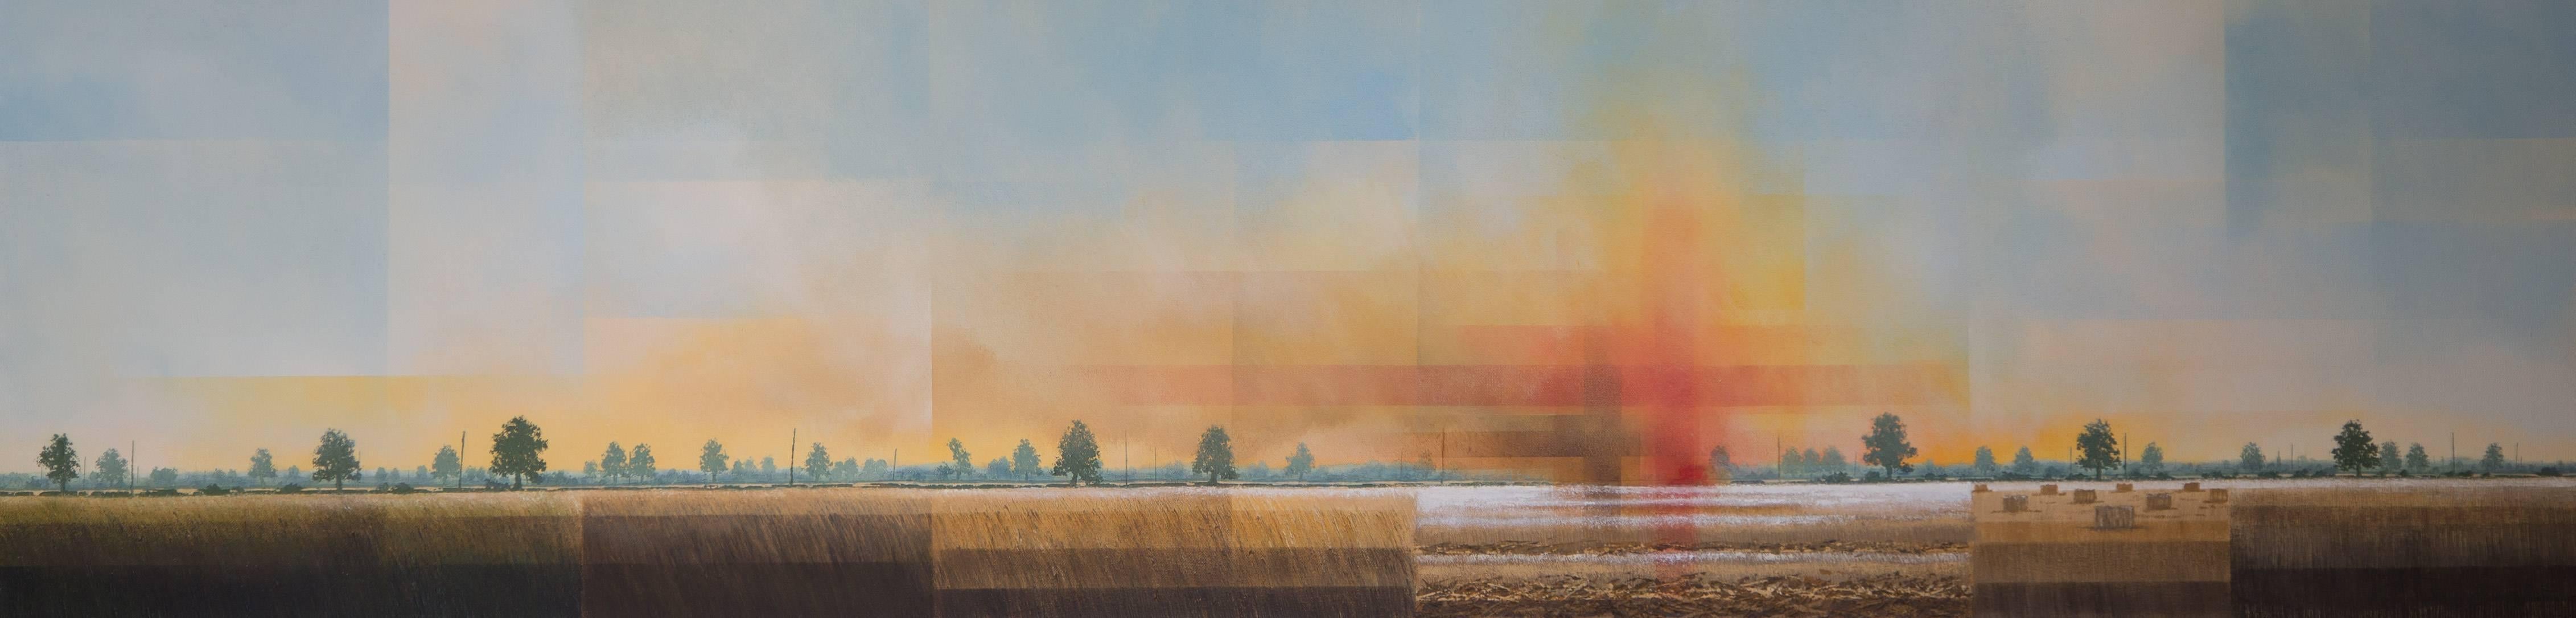 Glynne James Landscape Painting - Combine Sunset -experimental orange landscape painting oil on canvas 